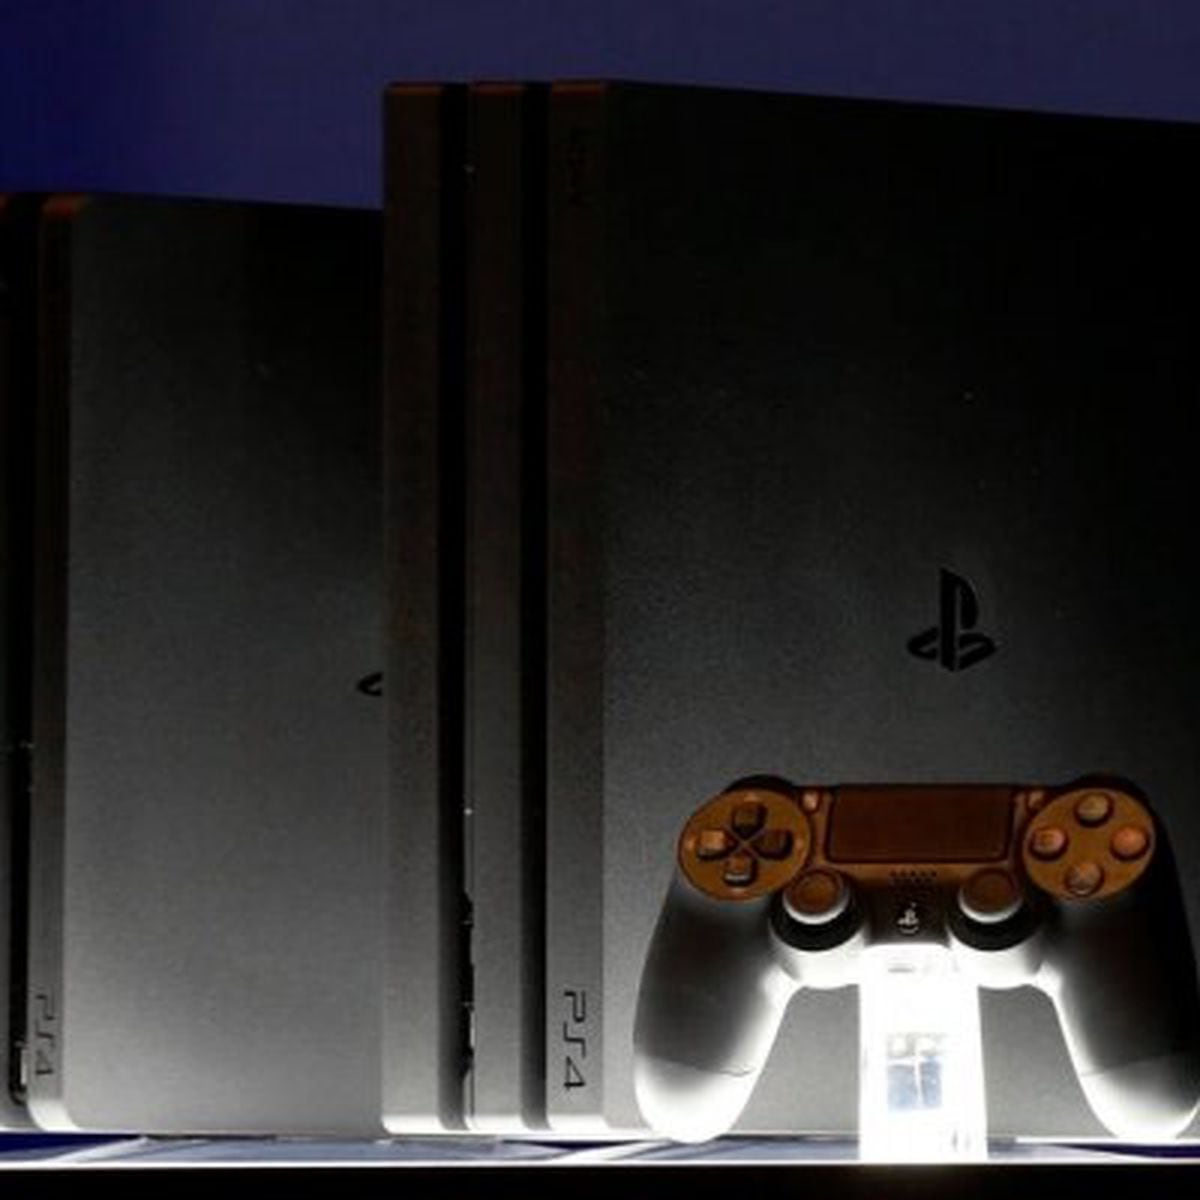 PS4, PS5: Preço dos jogos PlayStation Hits aumenta no Brasil